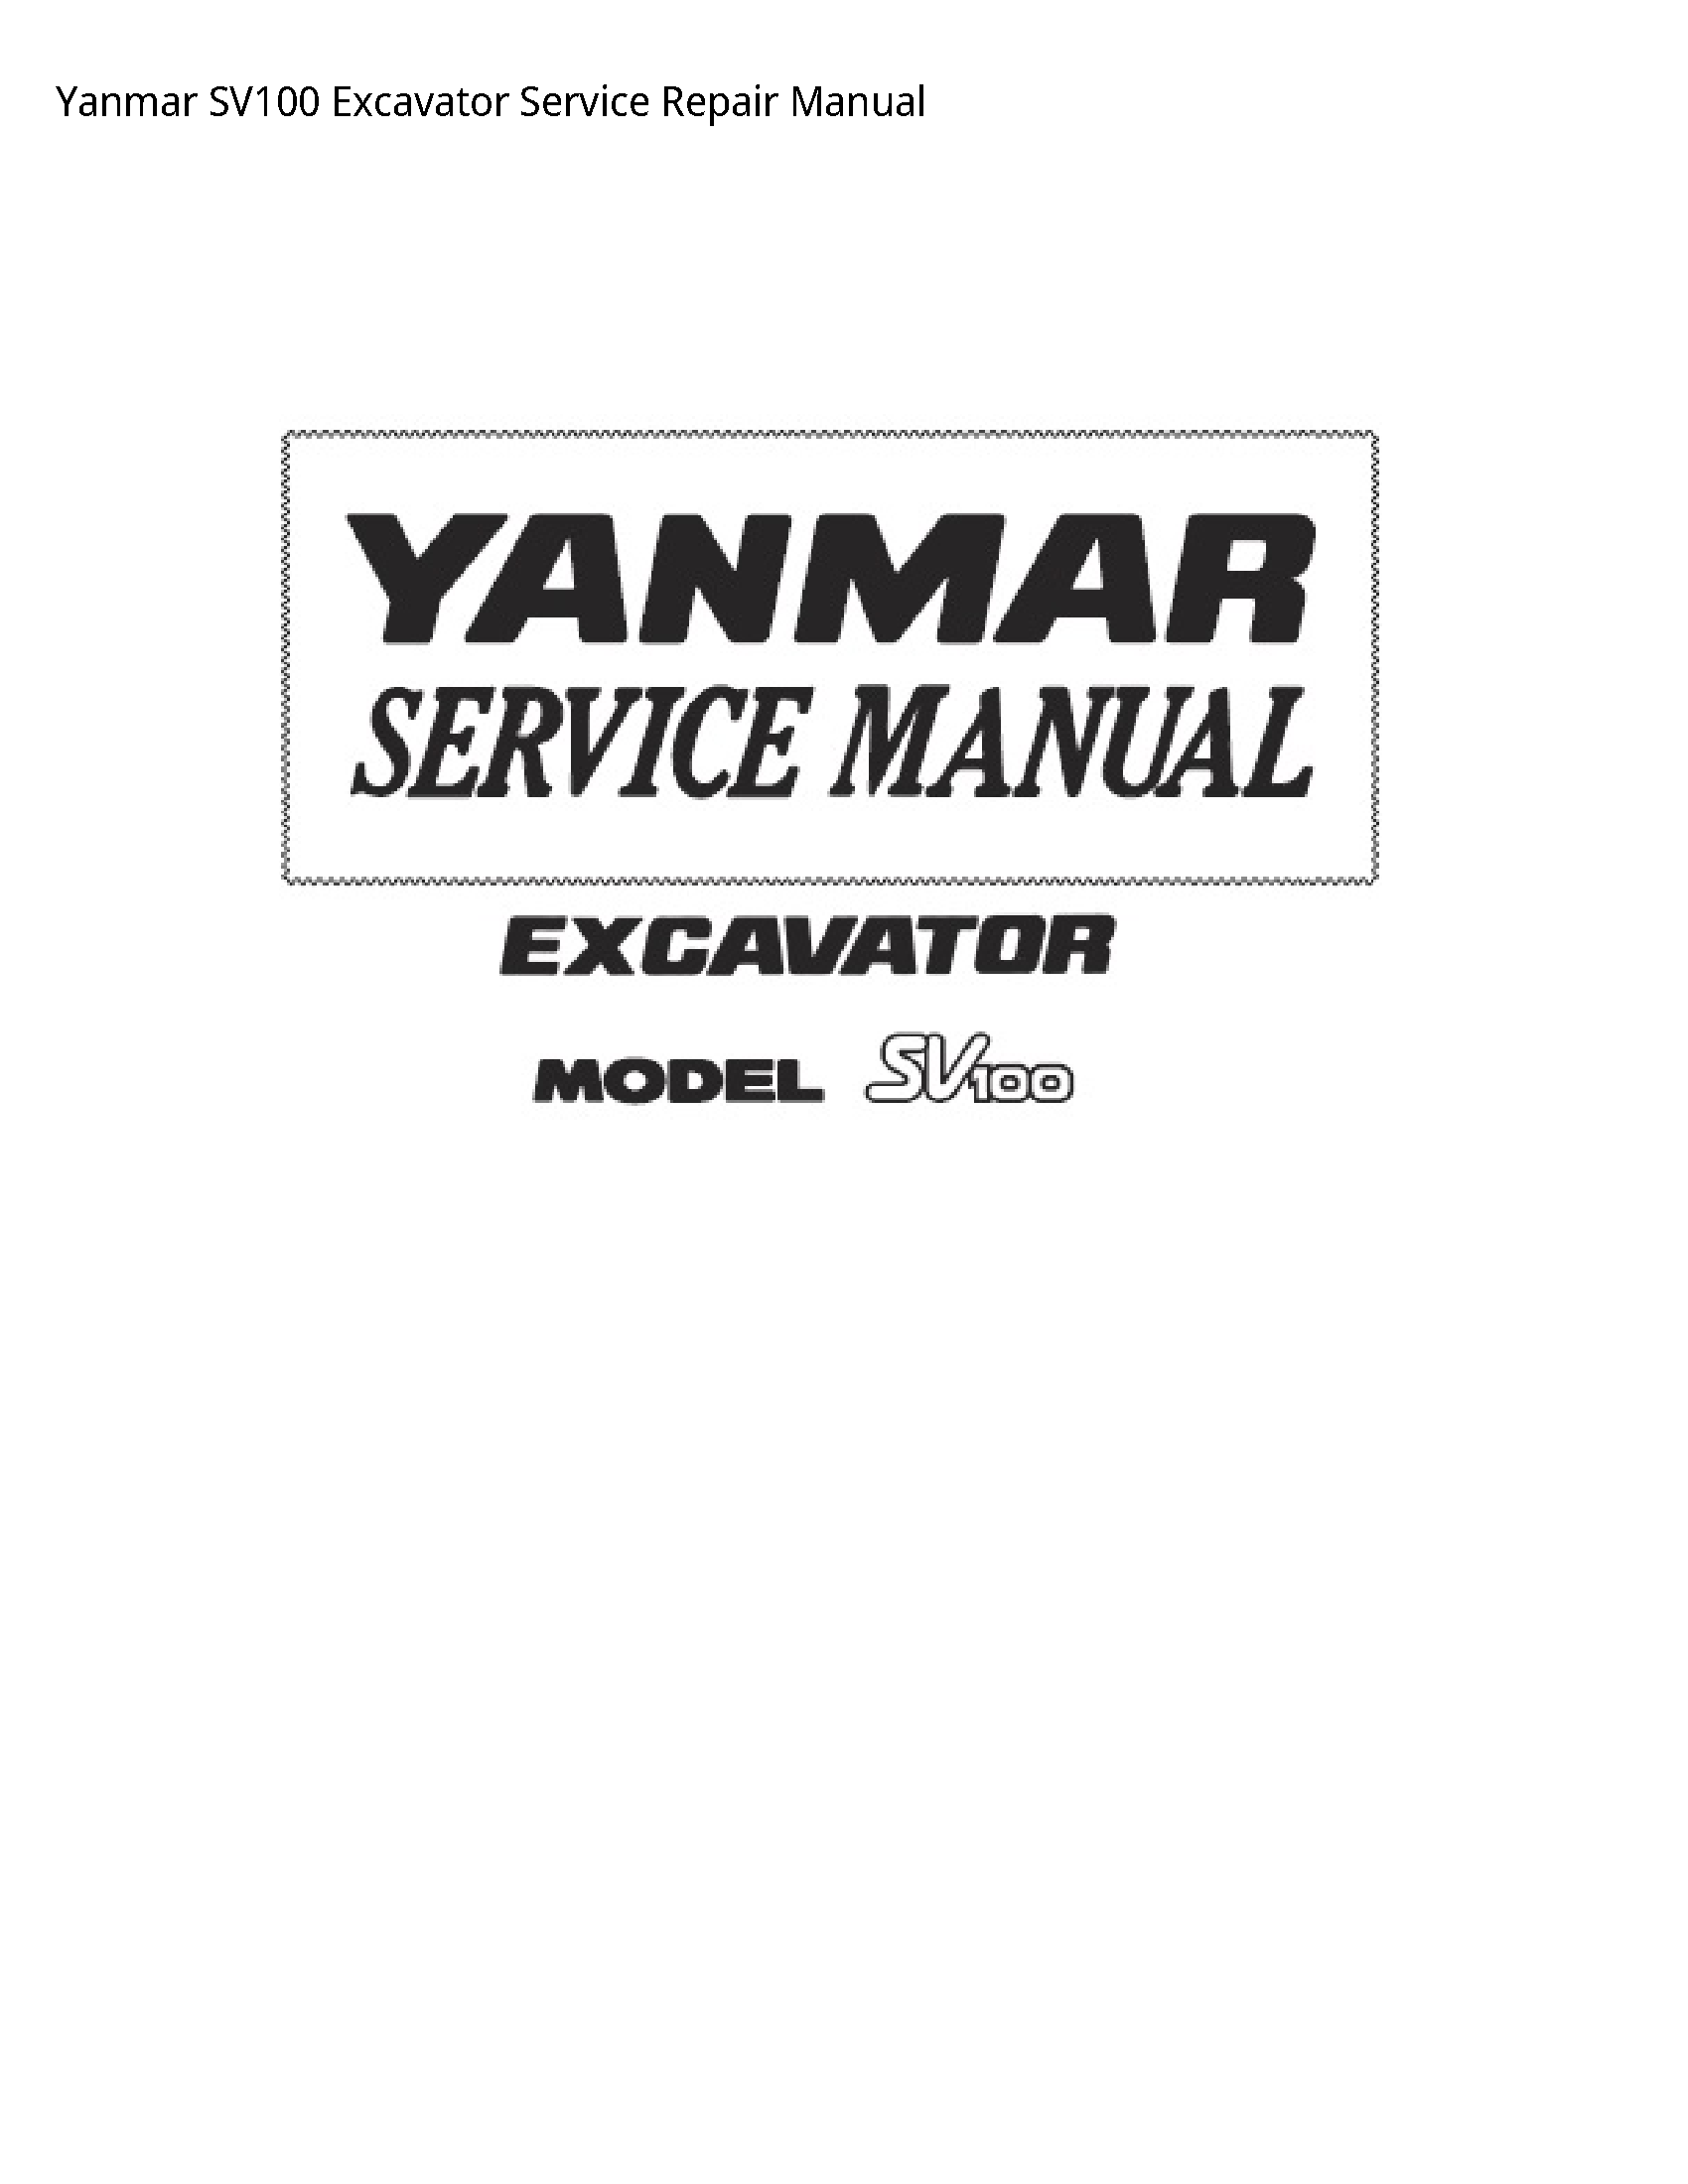 Yanmar SV100 Excavator manual